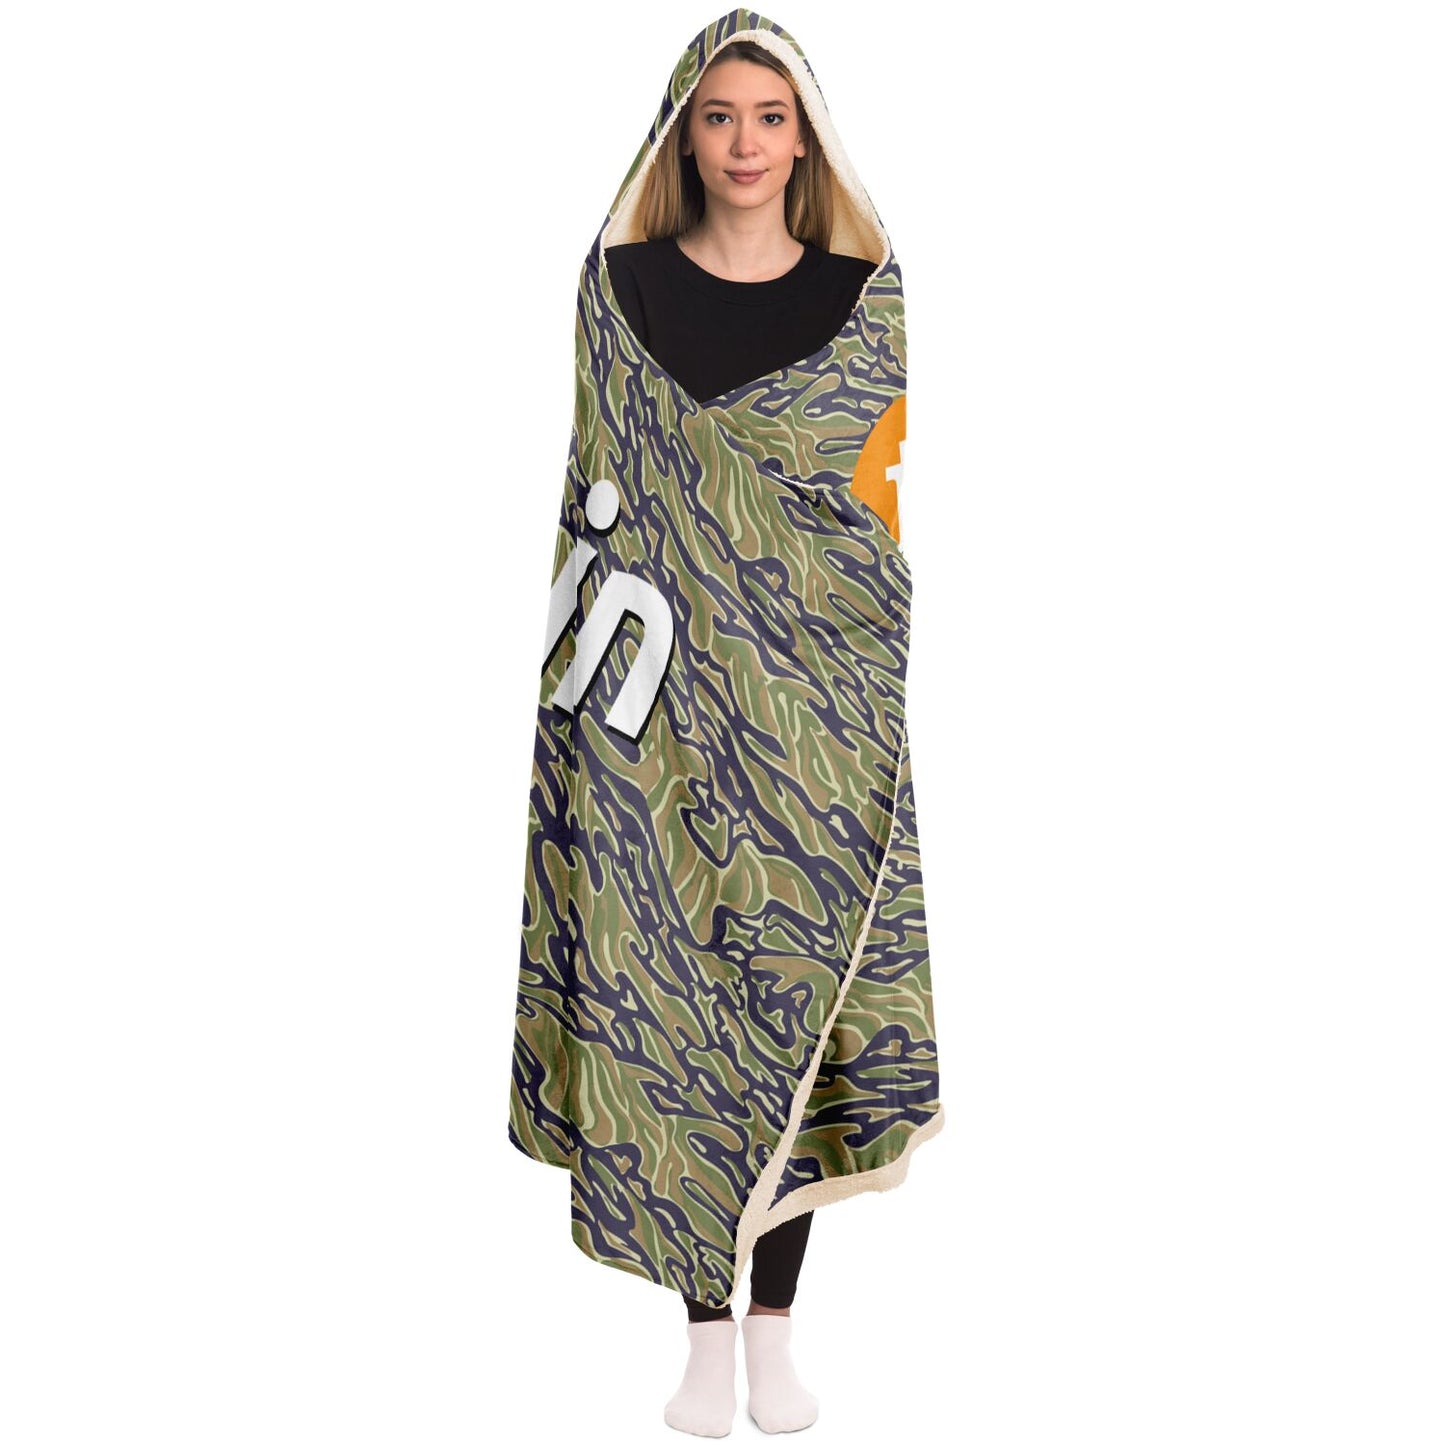 Bitcoin Camo Jungle Hooded Blanket